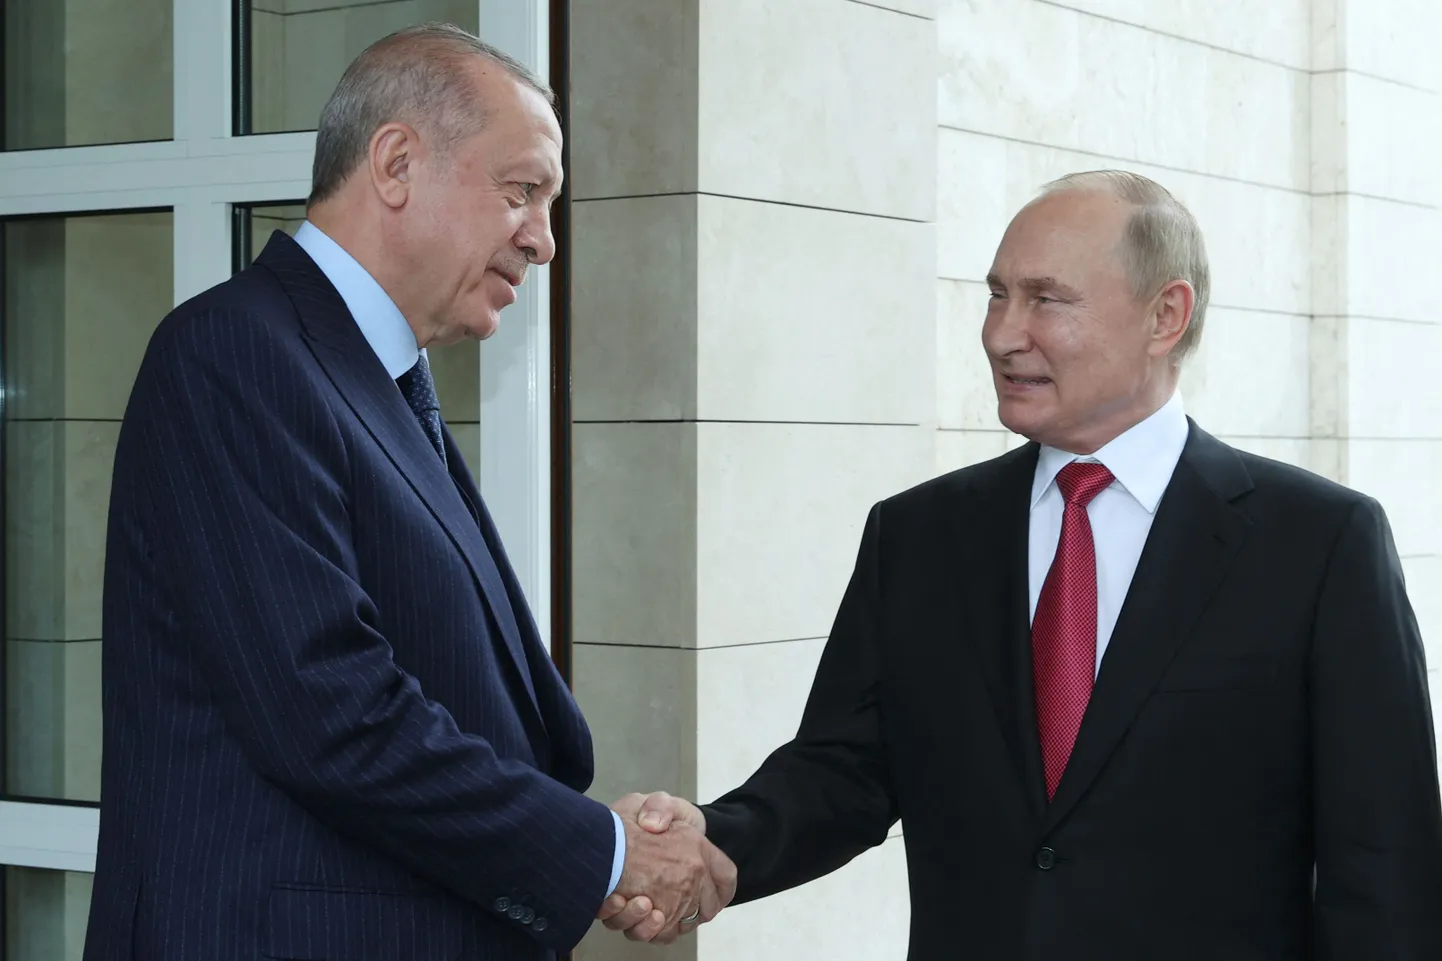 Türgi president Recep Tayyip Erdoğan kohtus Venemaal Sotšis 29. septembril 2021 Venemaa presidendi Vladimir Putiniga